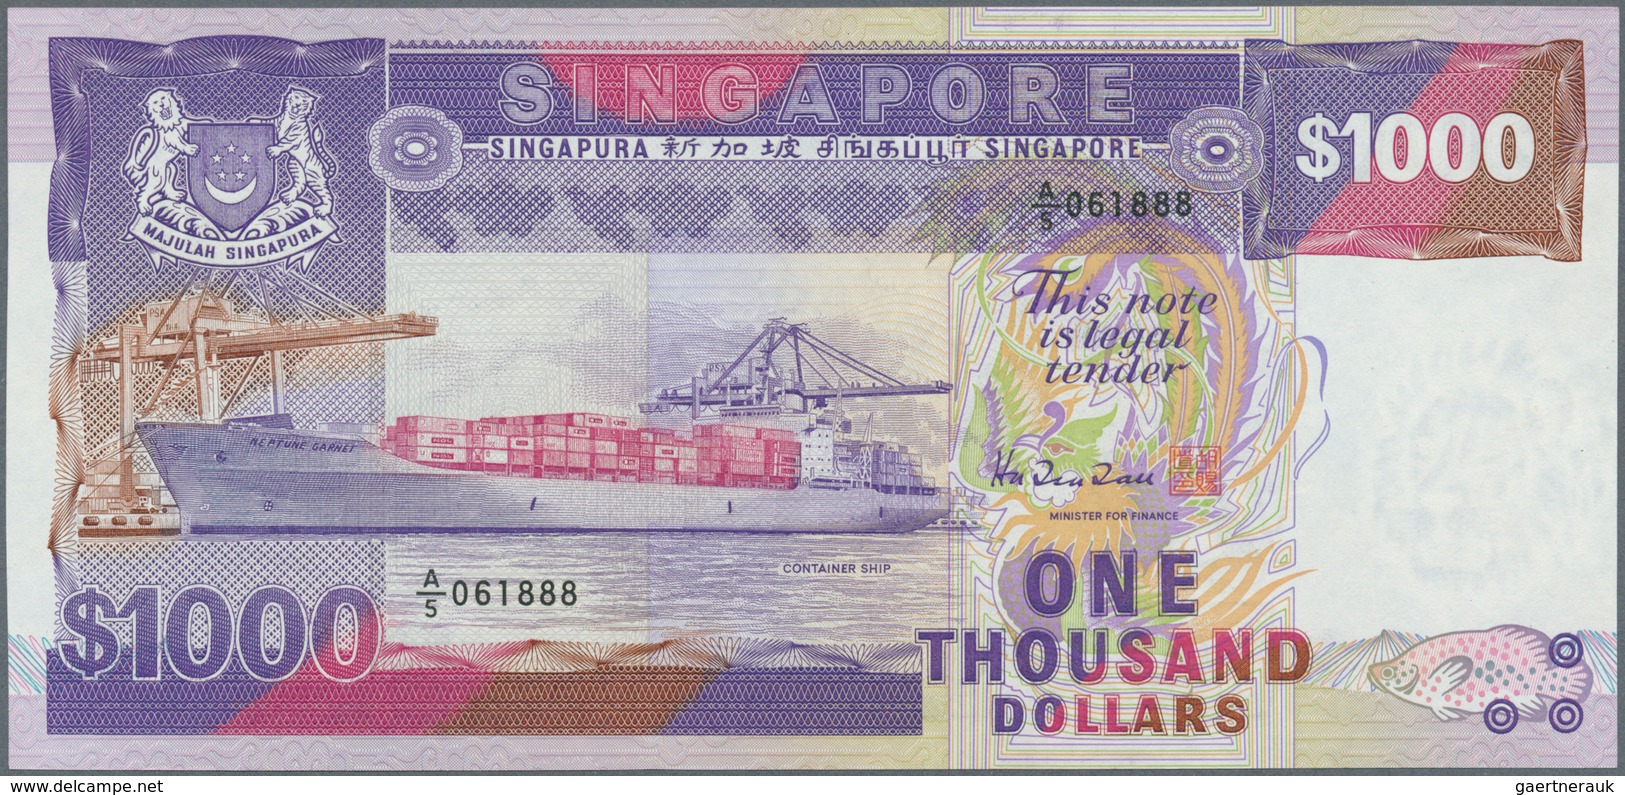 02368 Singapore / Singapur: 1000 Dollars ND P. 25 In Condition: UNC. - Singapur